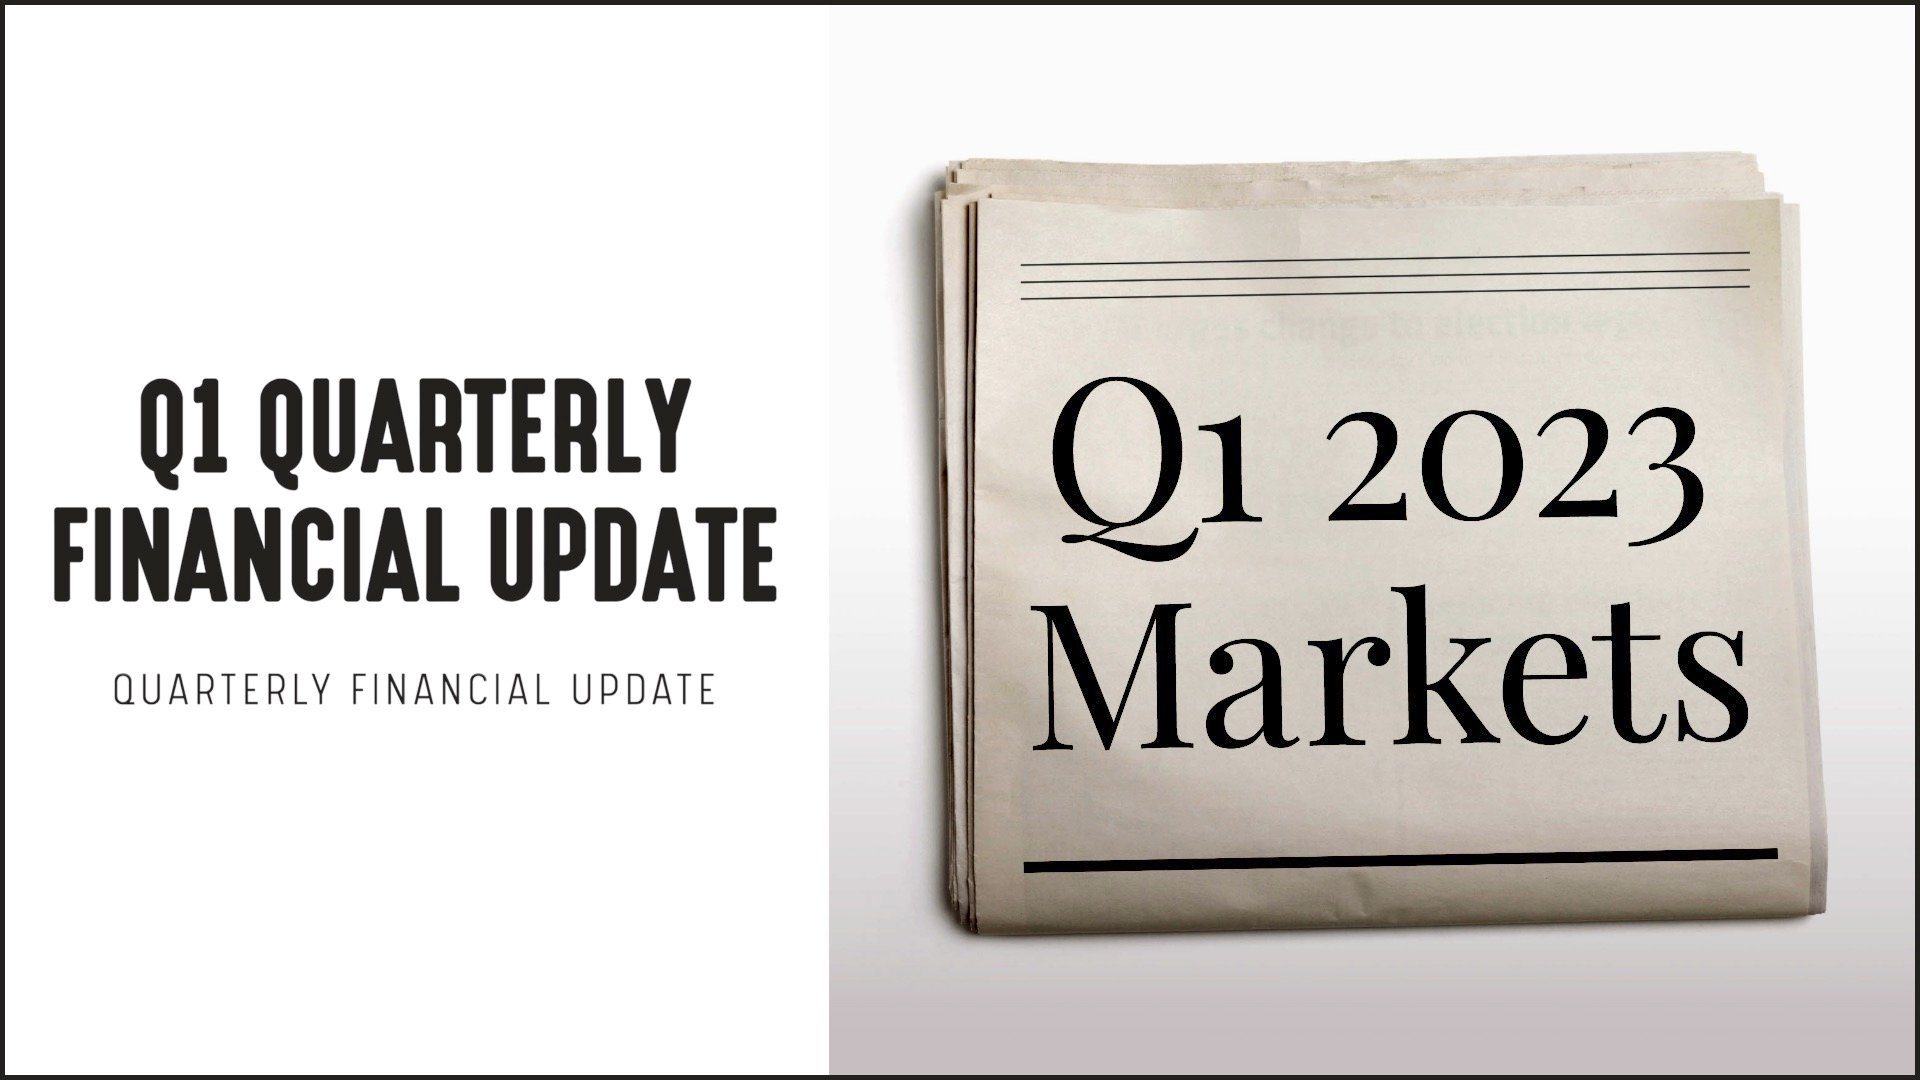 [NEW] Q1 2023 Quarterly Financial Update